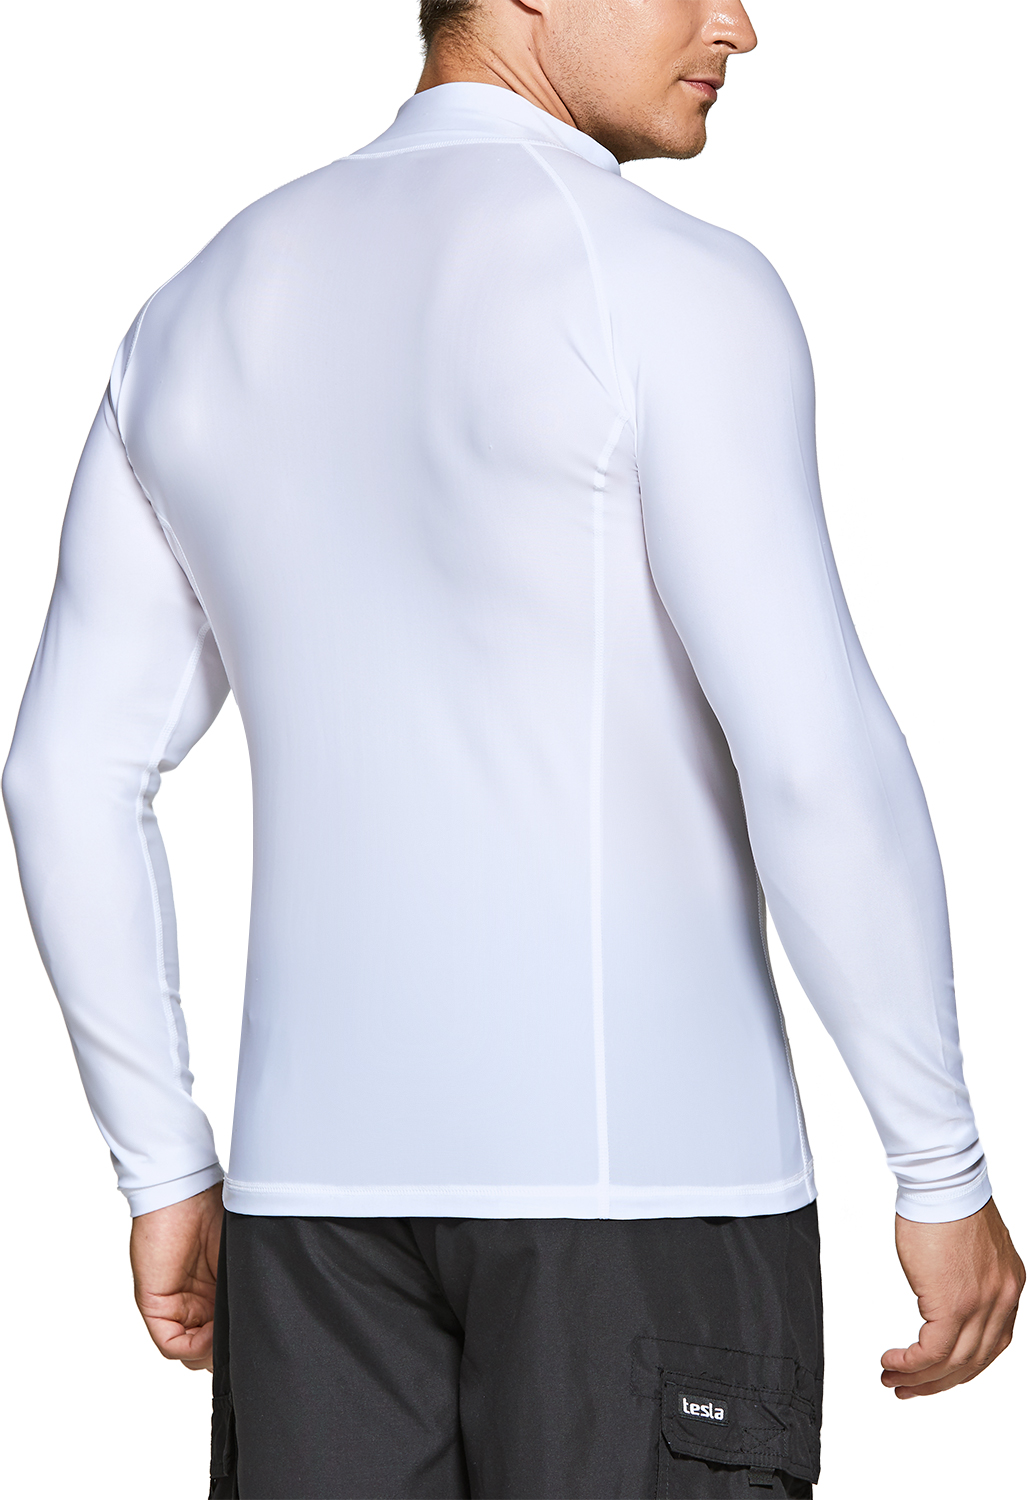 Quick-Dry Rash Guard for Men TSLA Swimwear Short Sleeve Top UV Protection UPF 50 